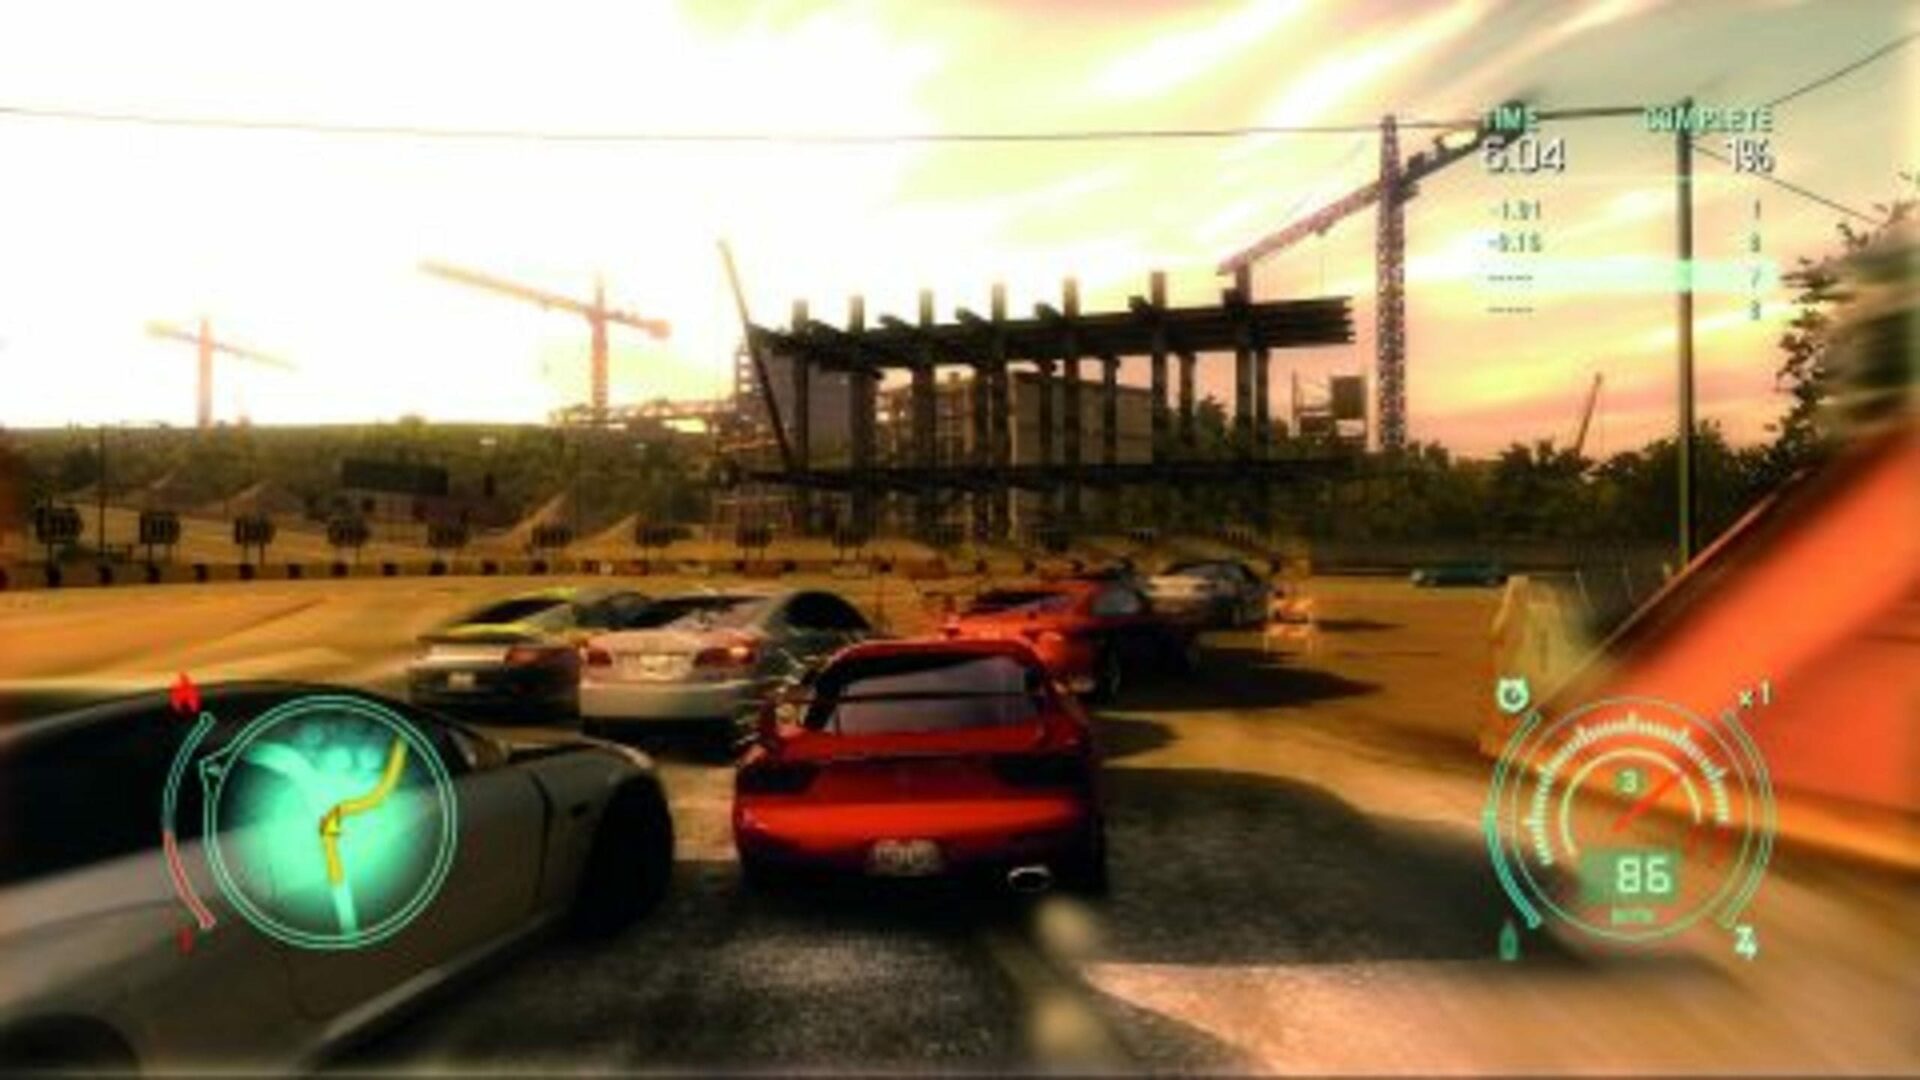 Mídia Física Jogo De Corrida Need for Speed Undercover Pc - GAMES &  ELETRONICOS